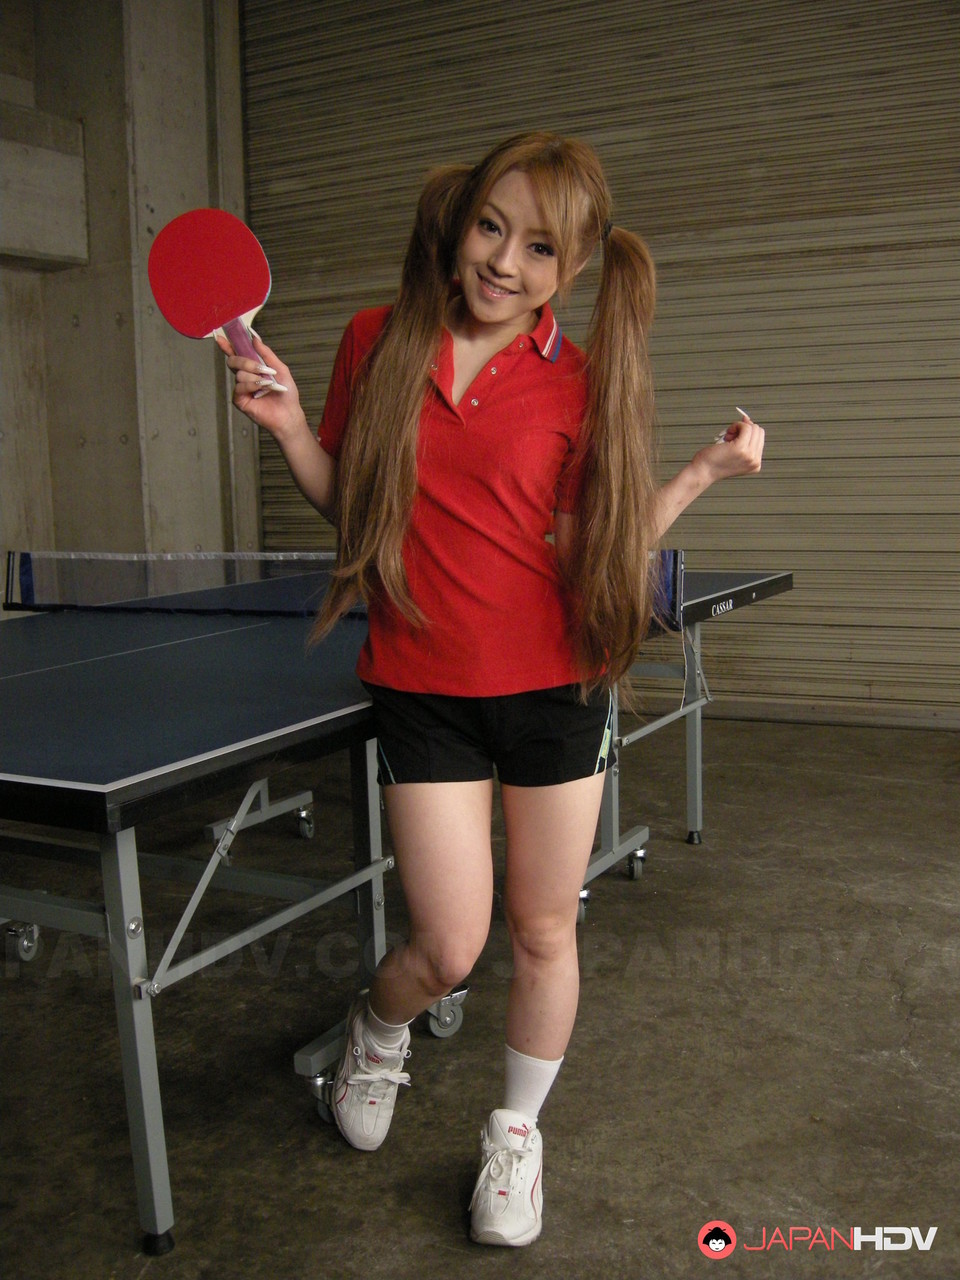 Japanese table tennis player Ria Sakurai gets face fucked by her coach 色情照片 #426550941 | Japan HDV Pics, Ria Sakurai, Japanese, 手机色情